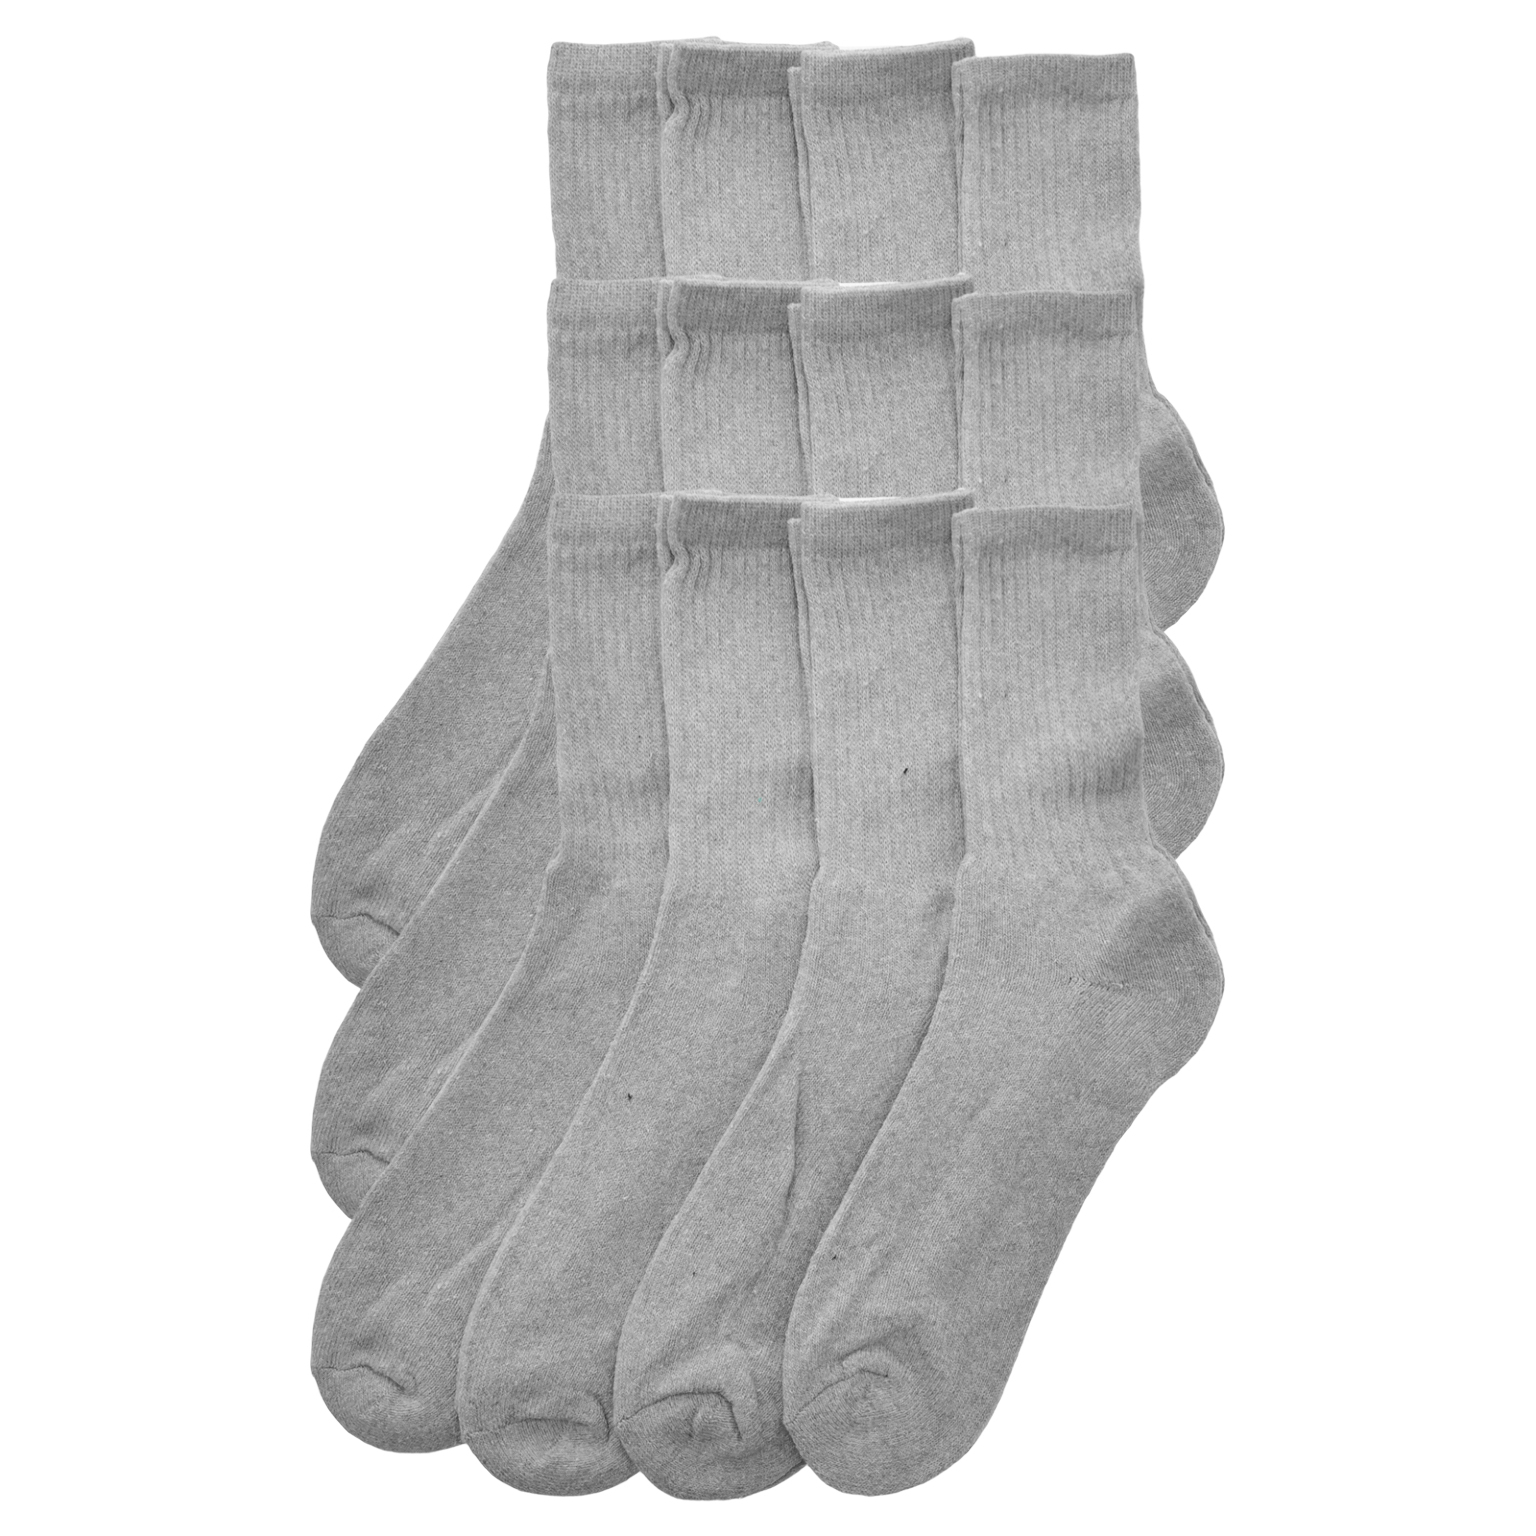 Wholesale Gray Cotton Blend Sport Crew Sock - Size L / XL(240x$0.67)